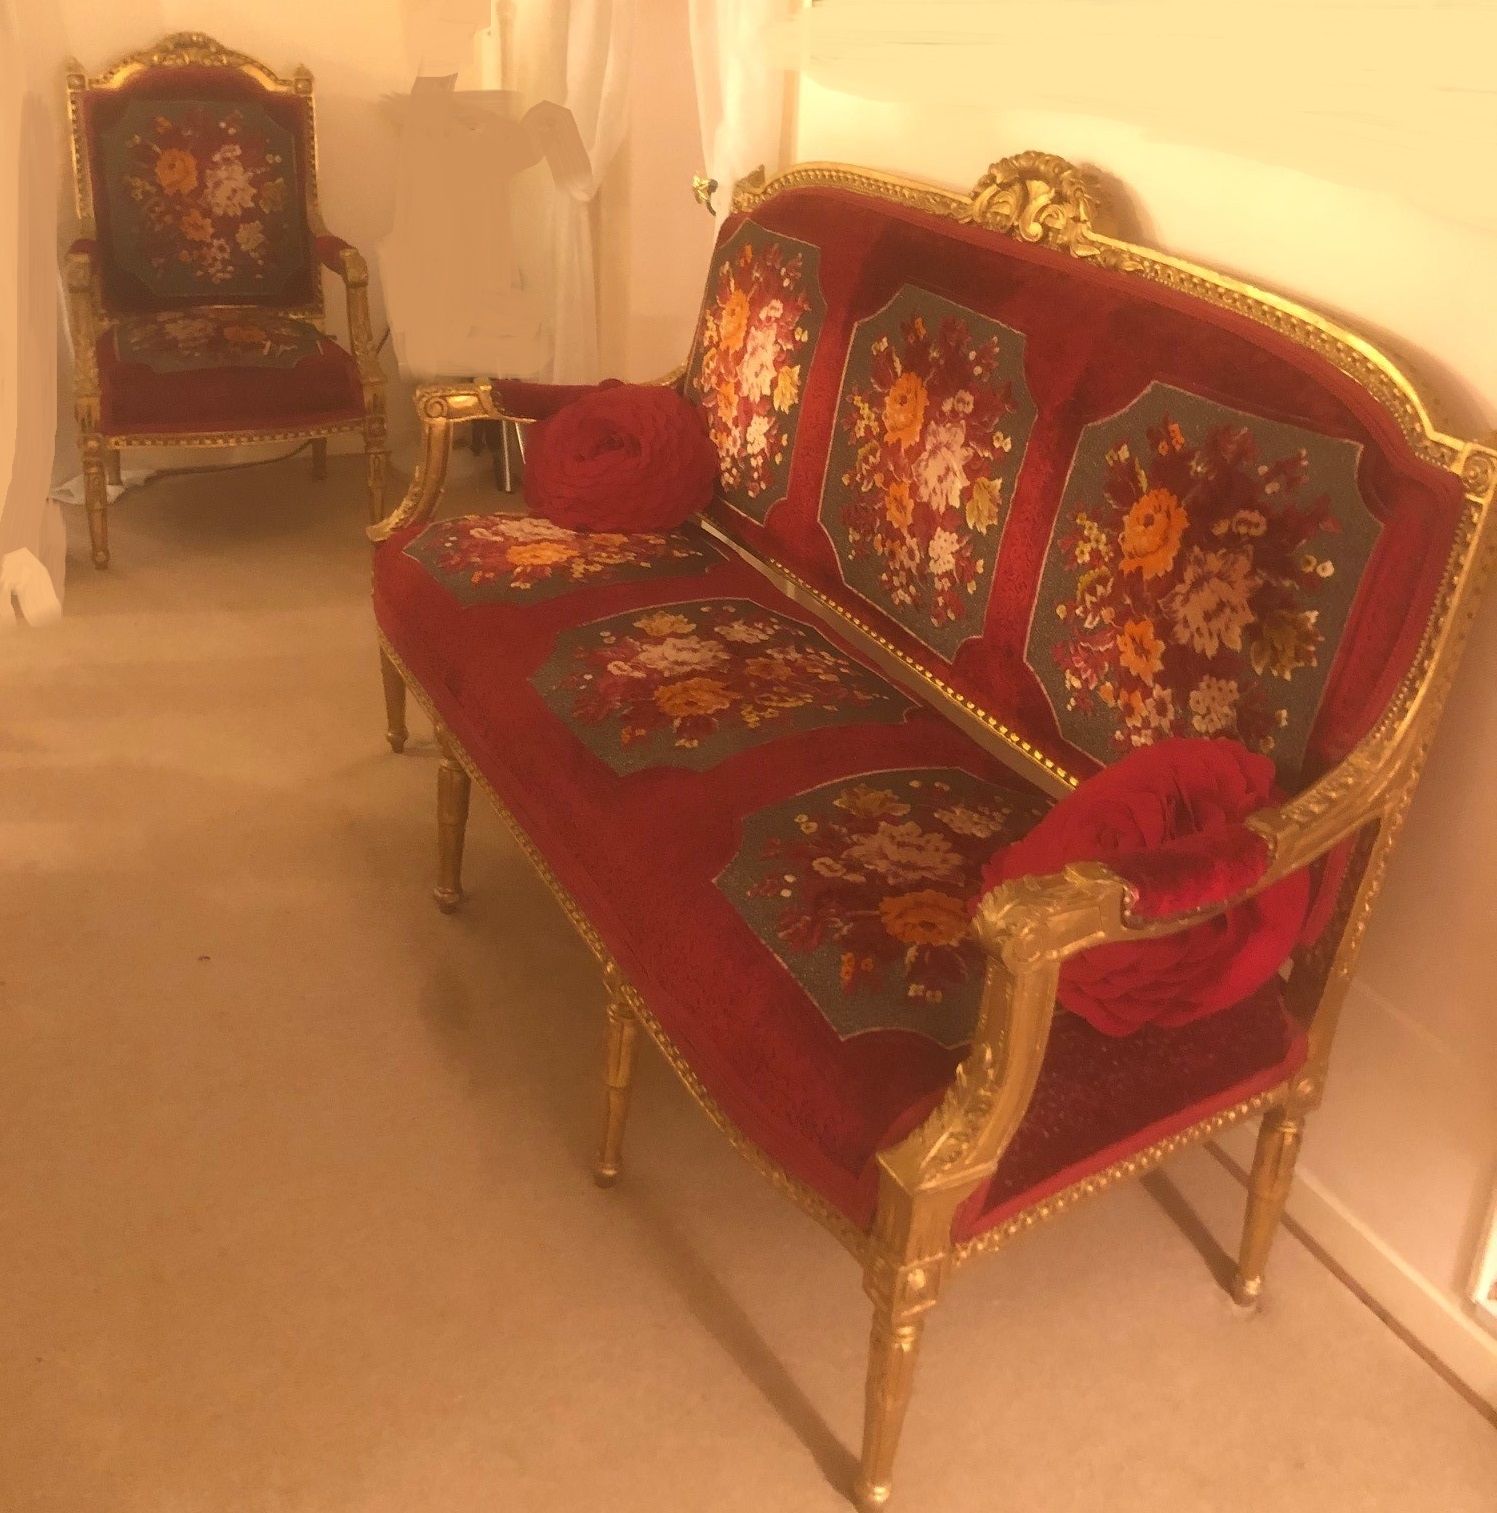 Null 路易十六风格的客厅

包括一张3人座沙发和4张金丝楠木扶手椅

椅背和座椅上覆盖有红底花卉装饰的软垫。

20世纪

使用和维护的条件